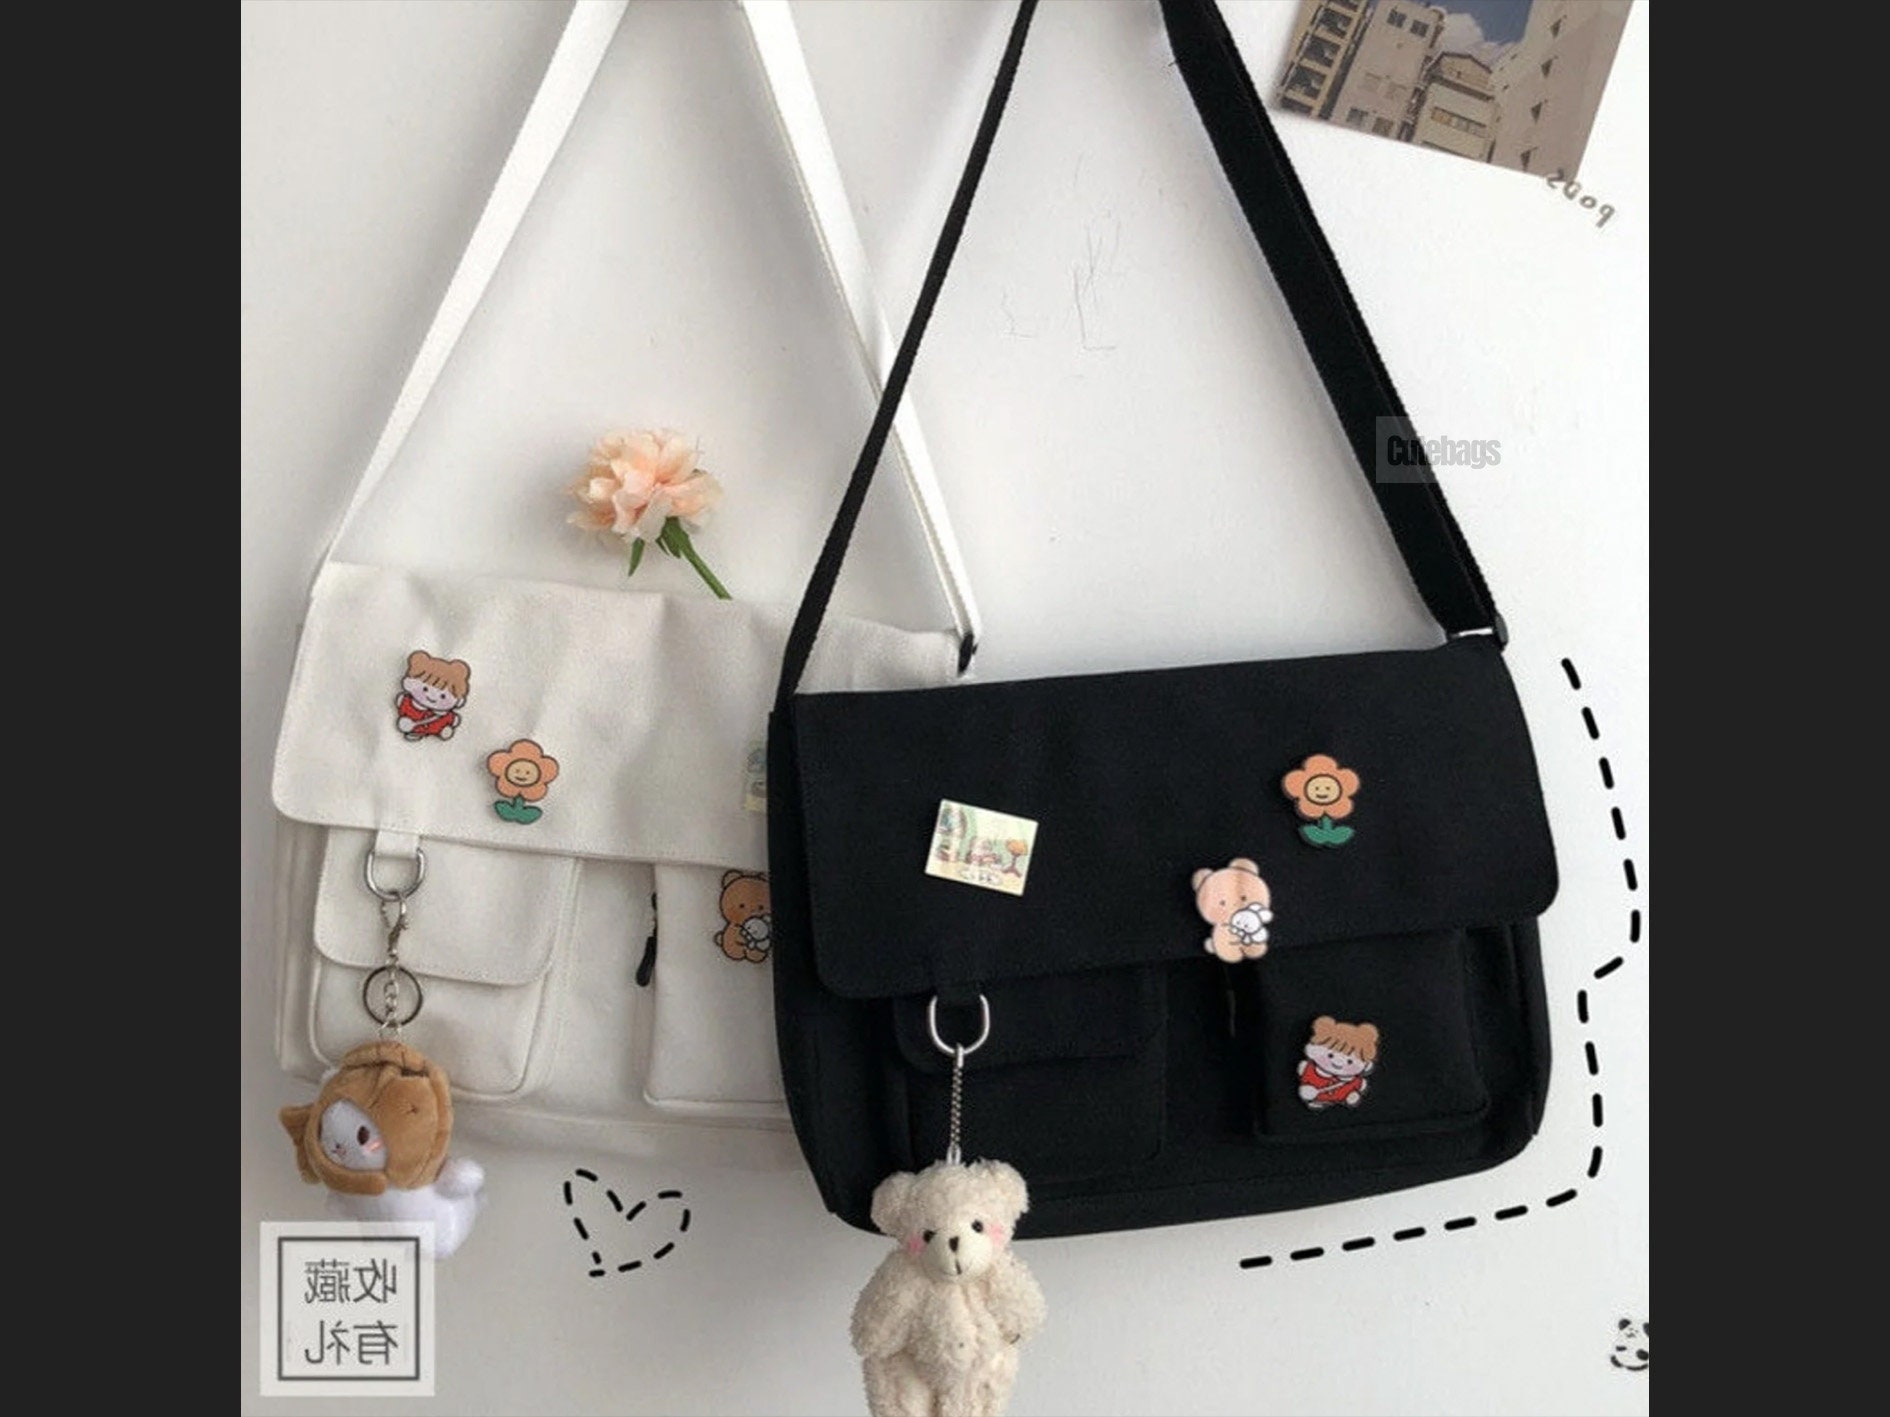 Danceemangoos Kawaii Messenger Bag for Women Cute Crossbody Bag with Kawaii Accessories School Shoulder Bags Aesthetic Tote Bag, Size: Large, Beige